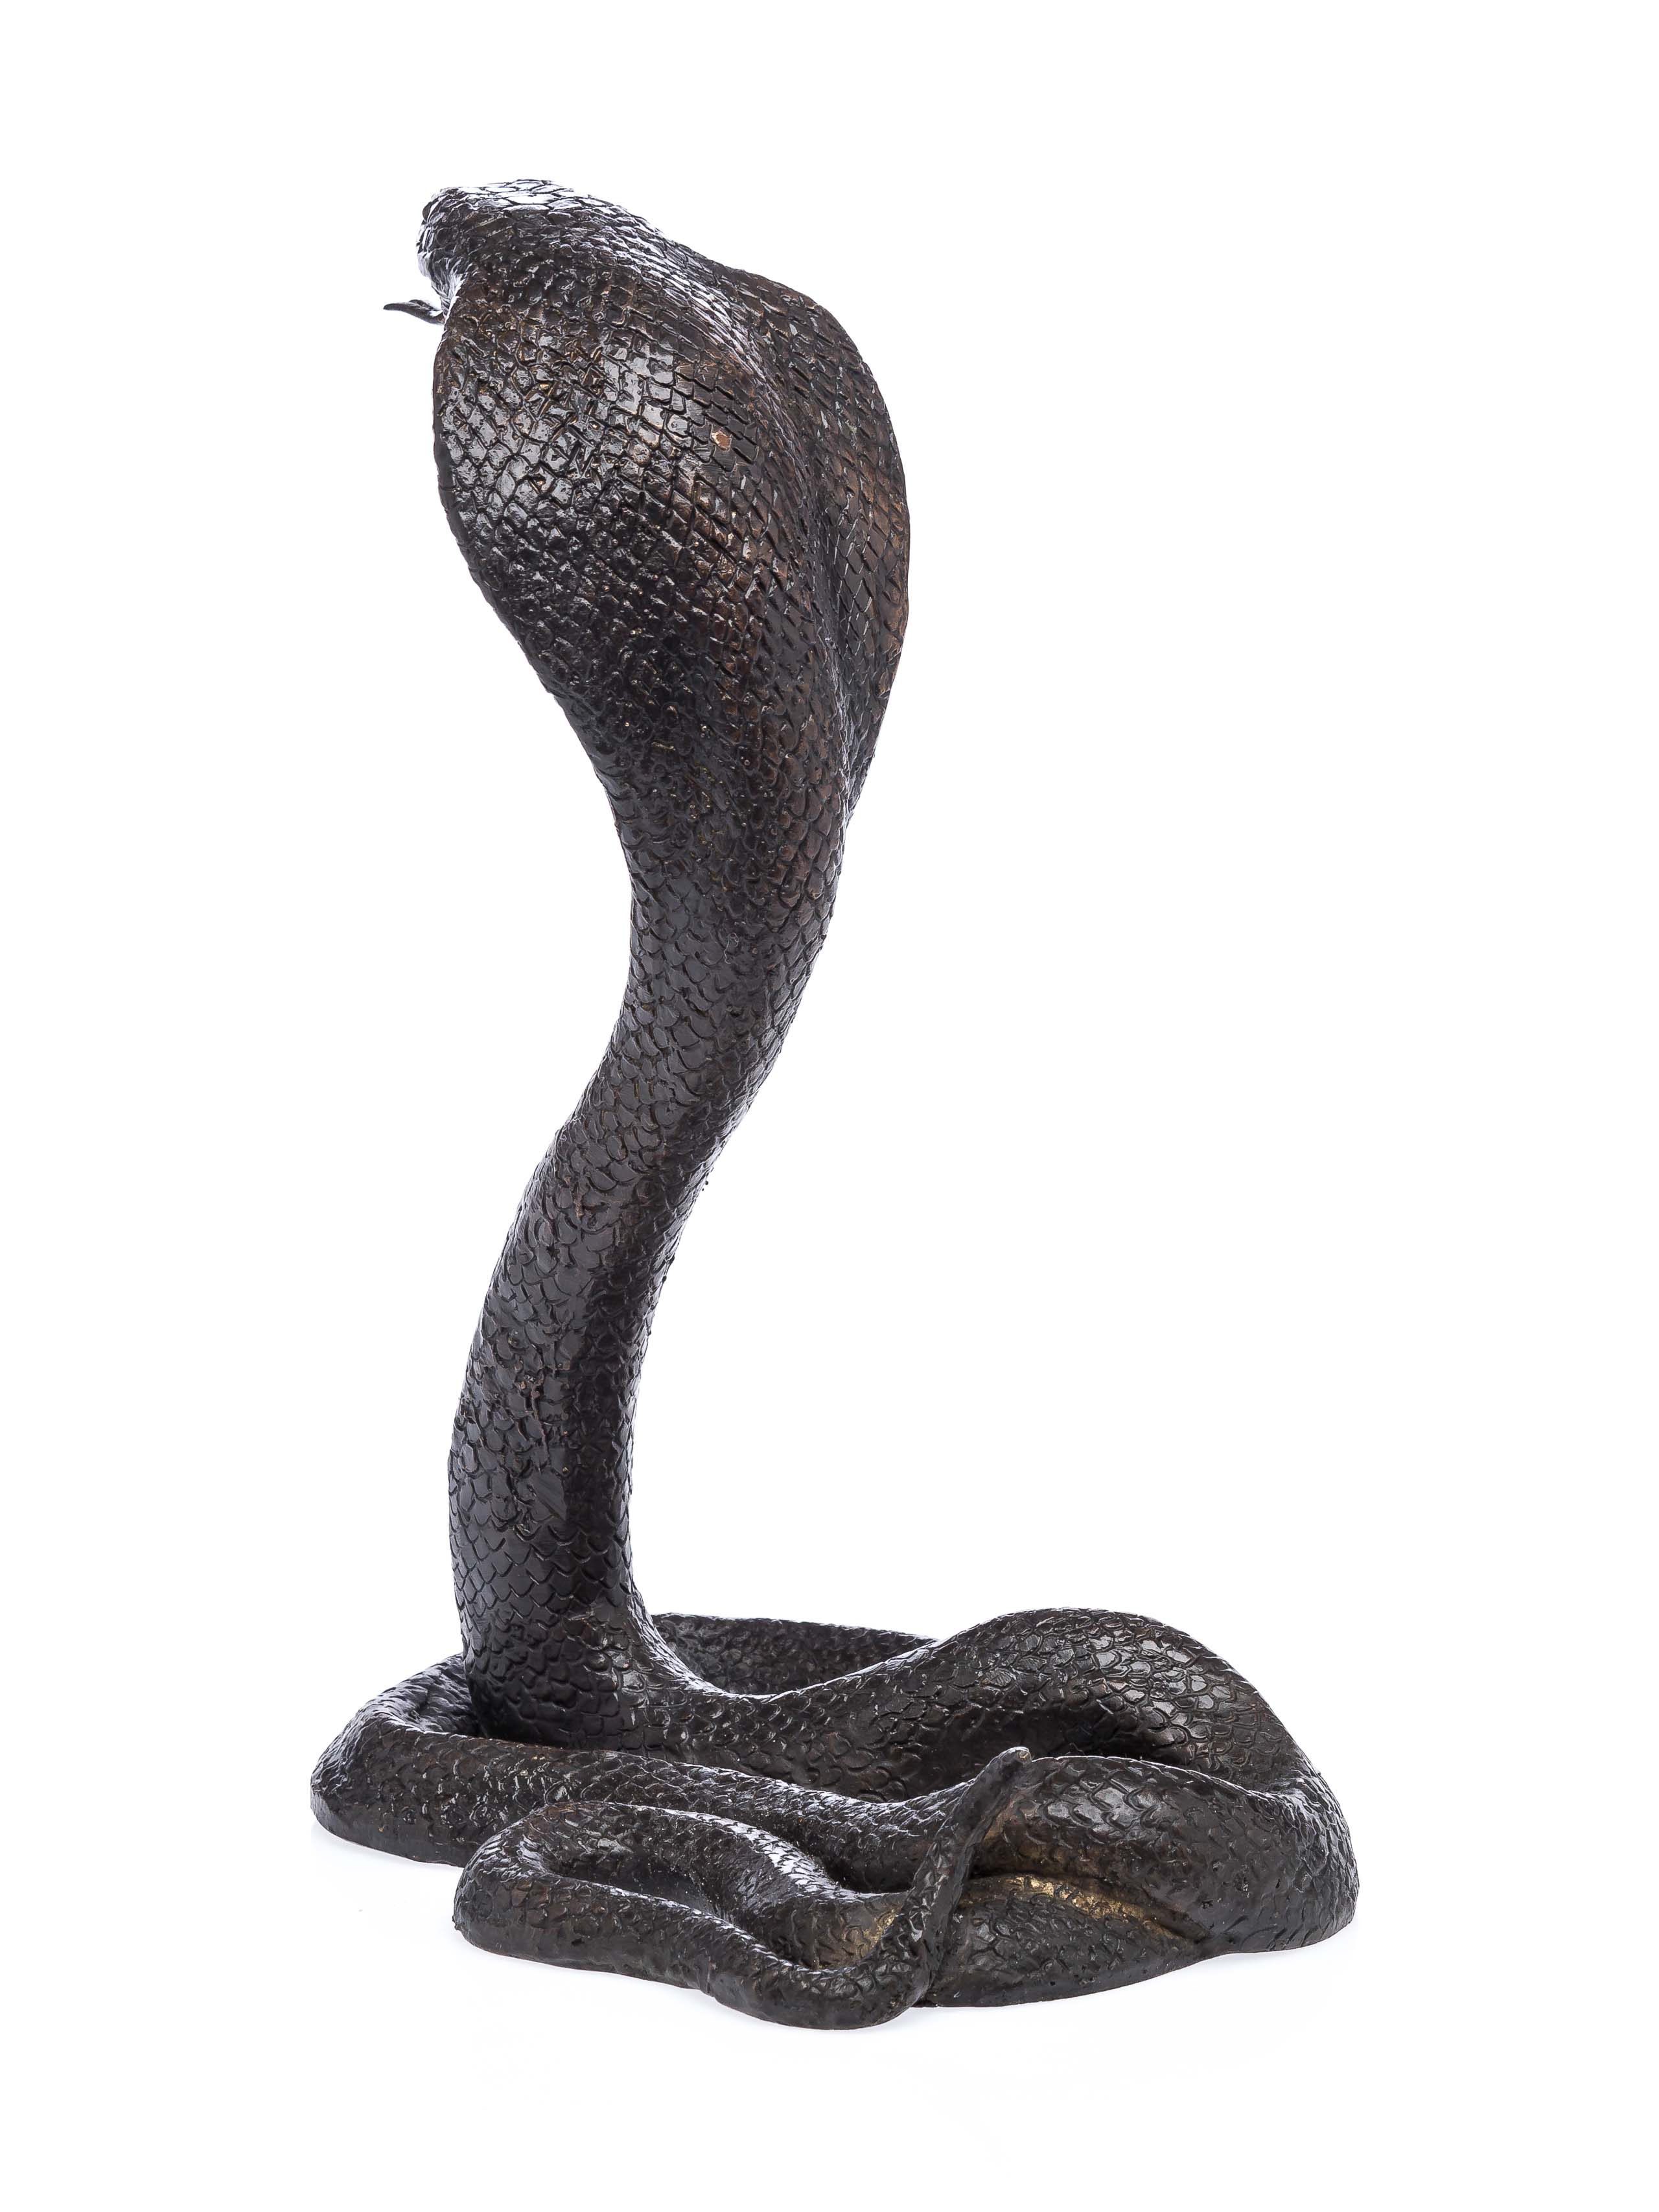 Bronzeskulptur Bronze Skulptur Schlange Kobra Cobra Statue Bronzefigur 28cm 